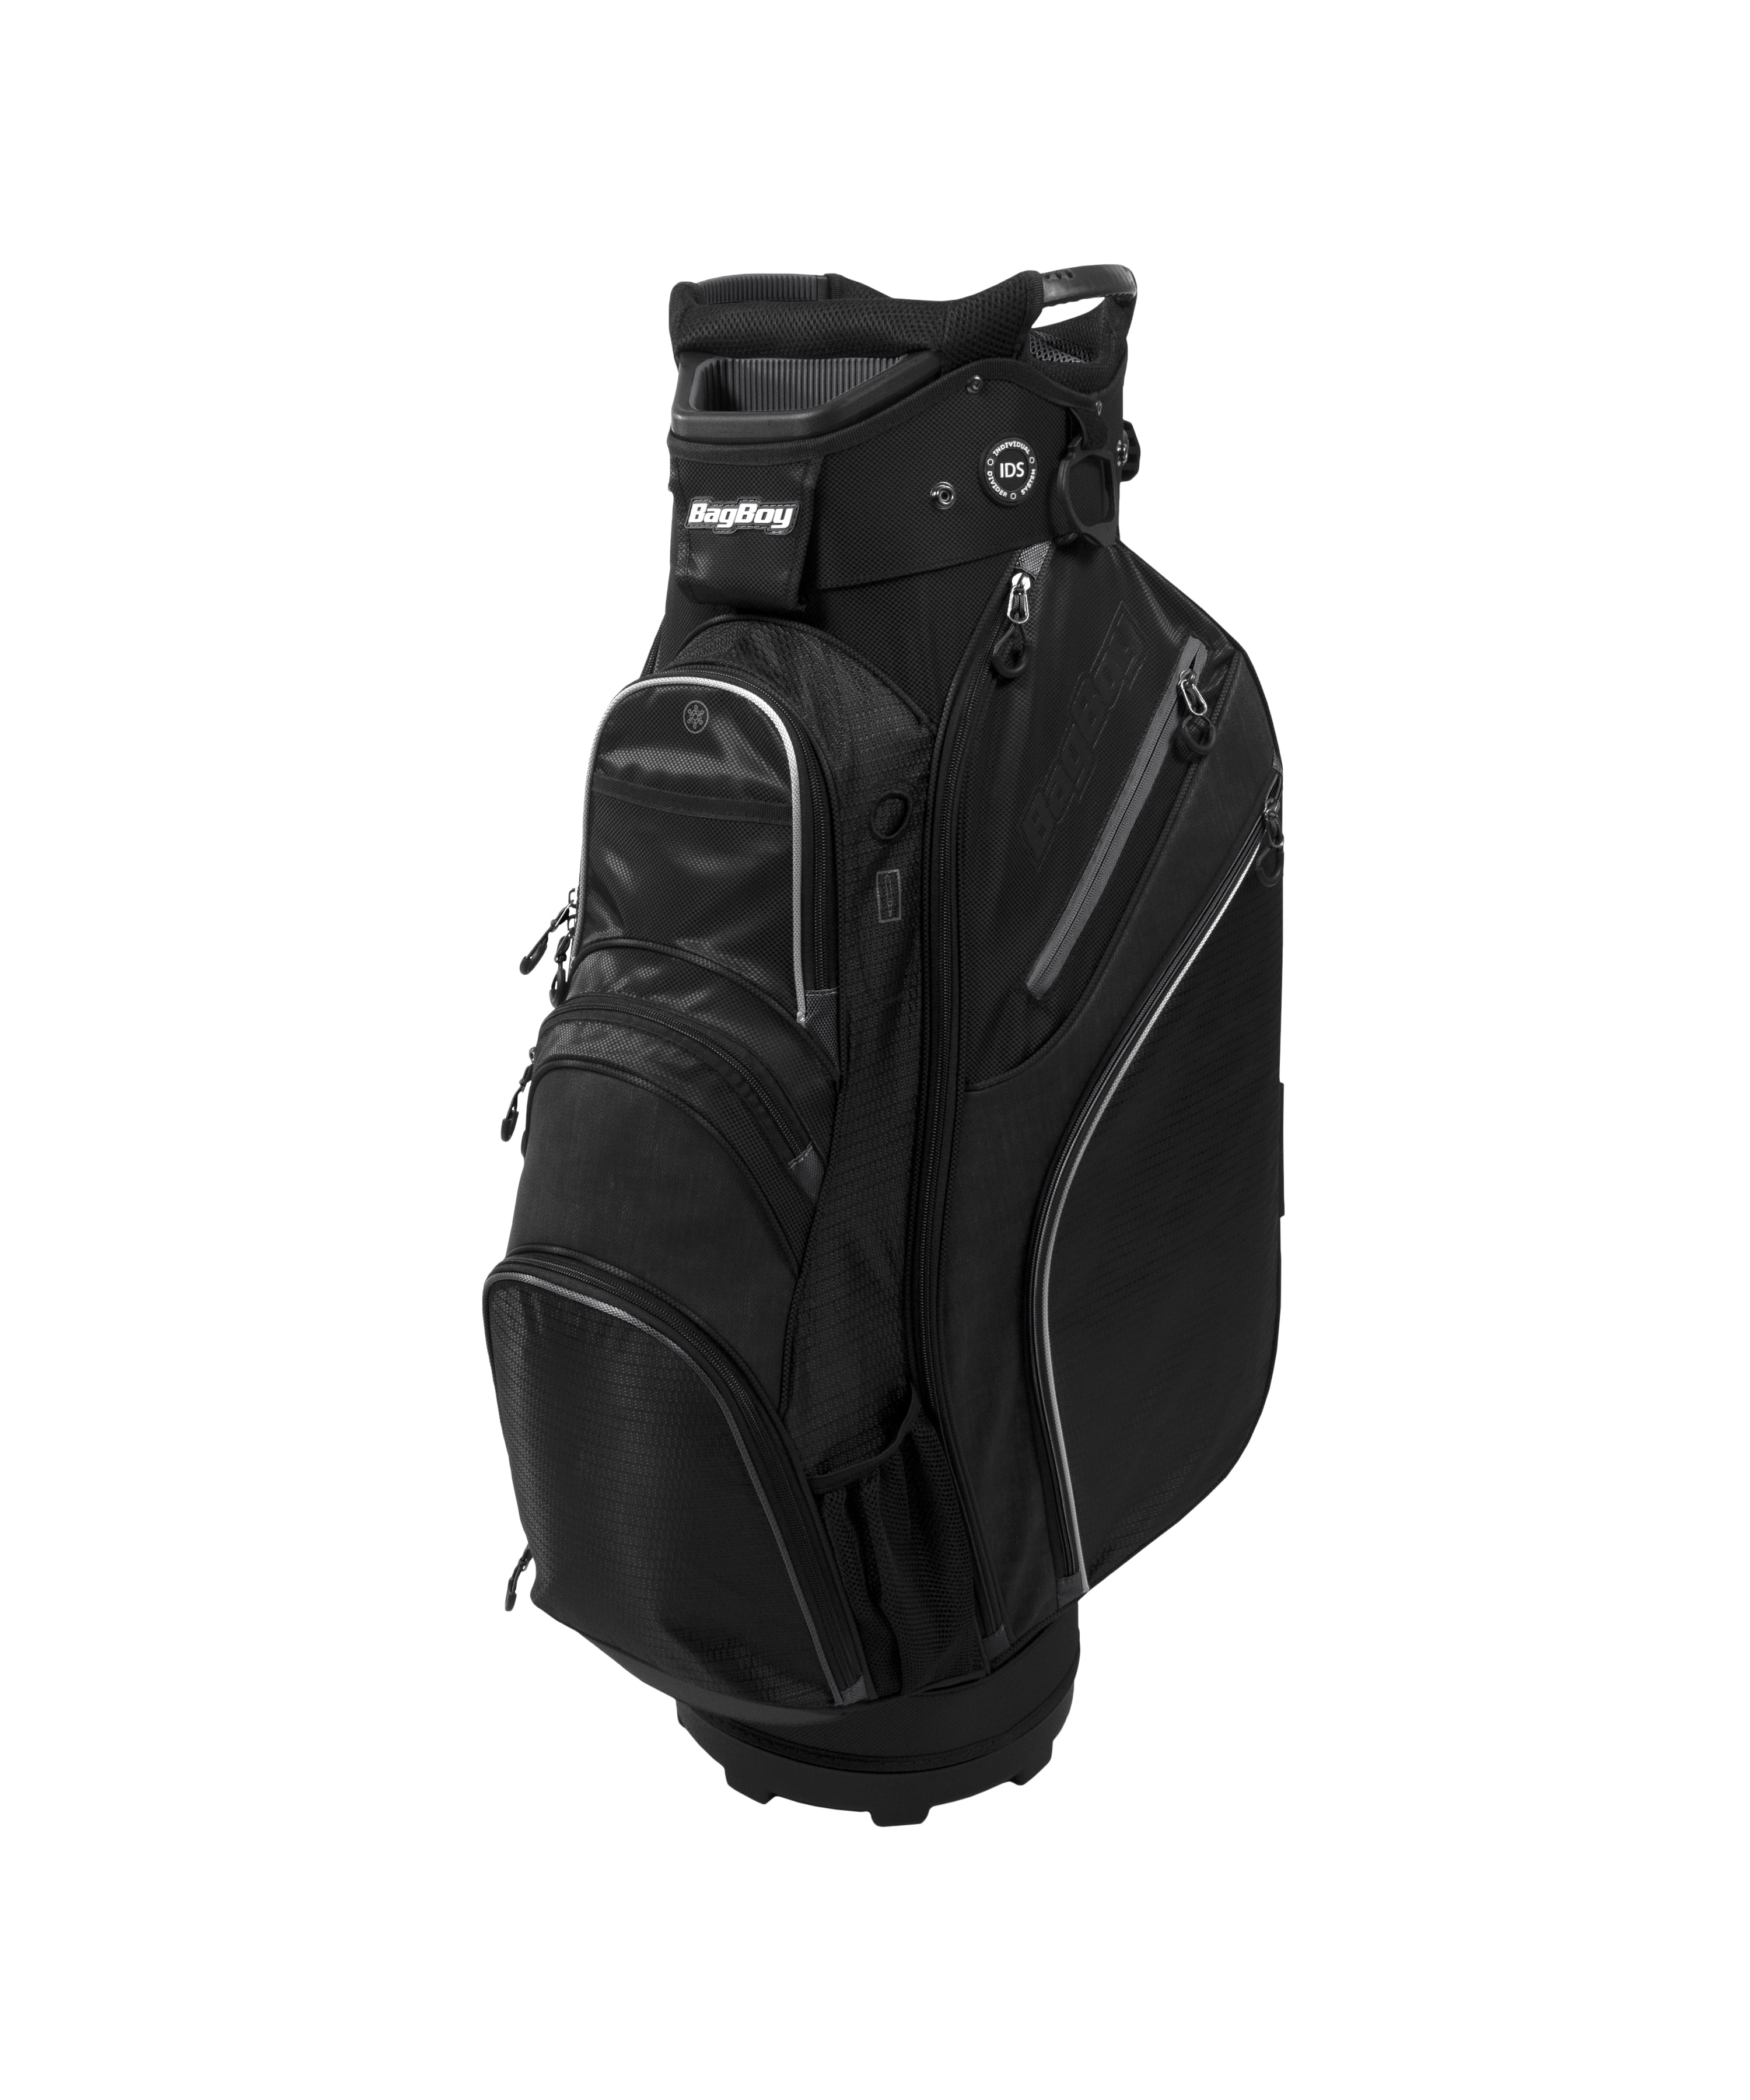 Bag Boy Golf Chiller Cart Bag Black/Charcoal/Silver - Walmart.com